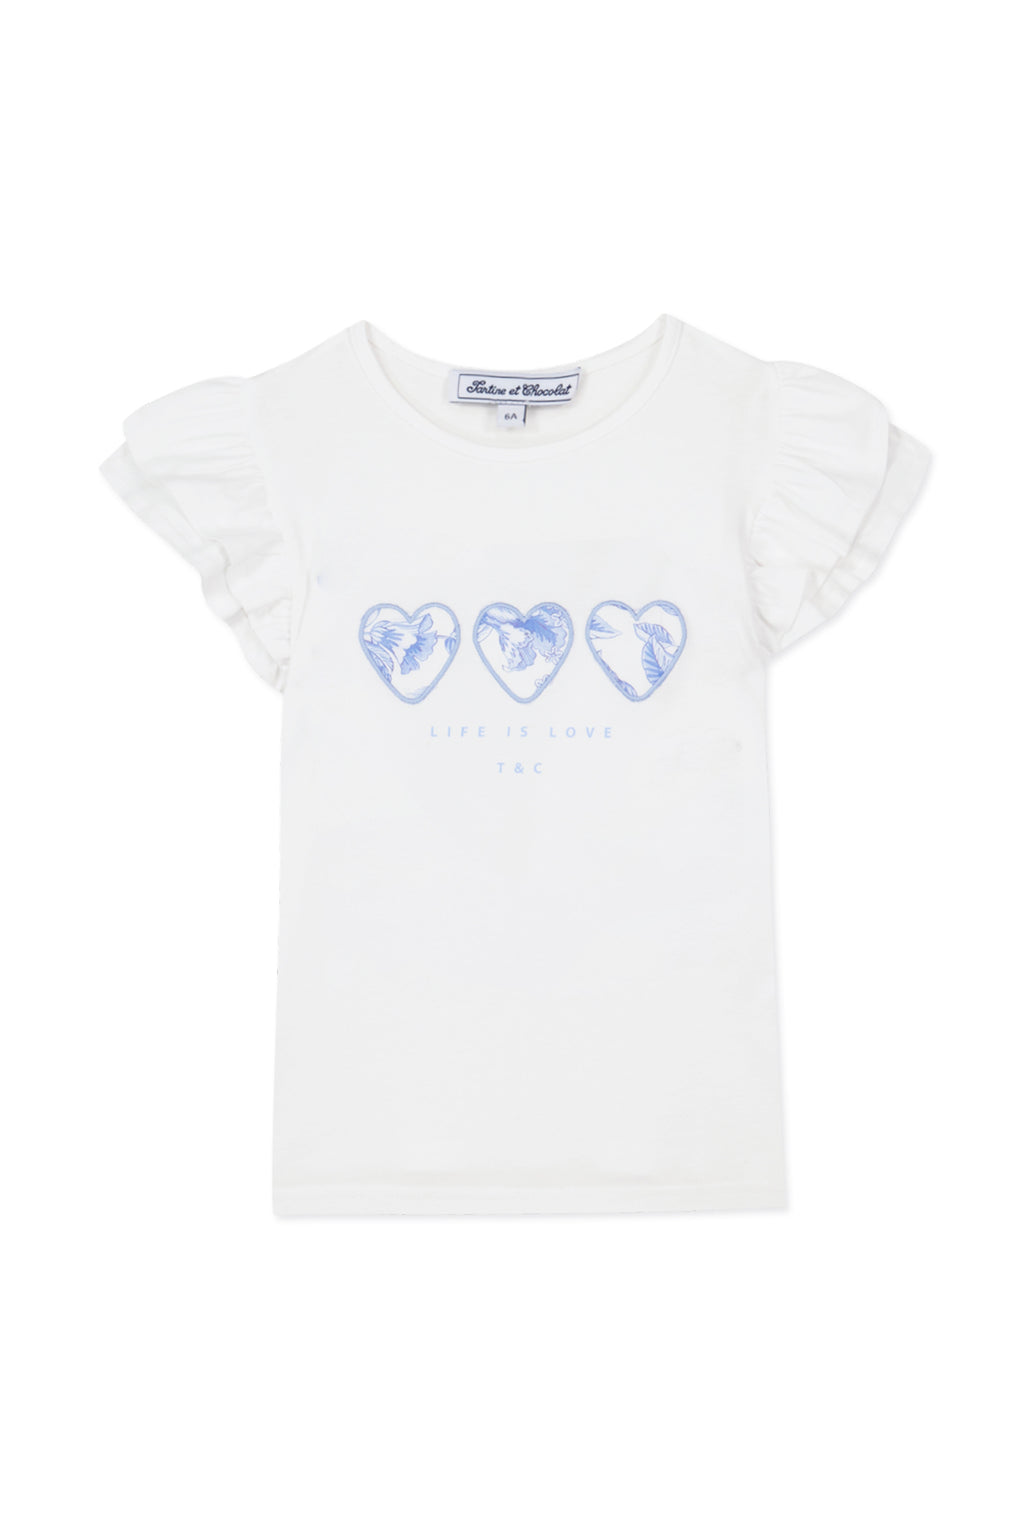 T-shirt - White Illustration Heart fabric Liberty